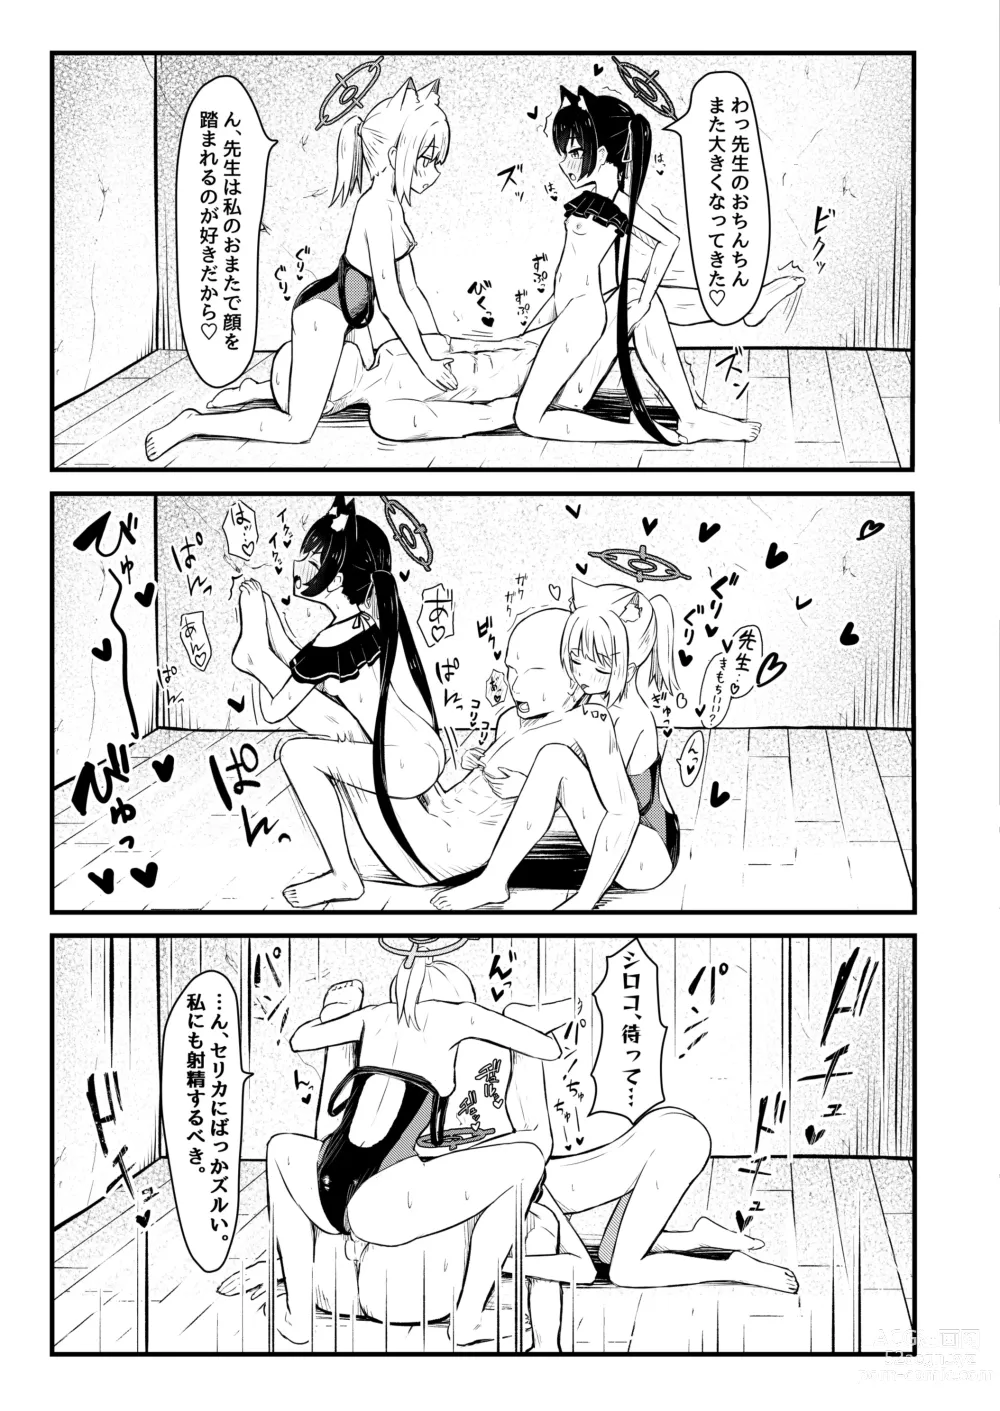 Page 19 of doujinshi ...Hm, Sensei o Osou no.